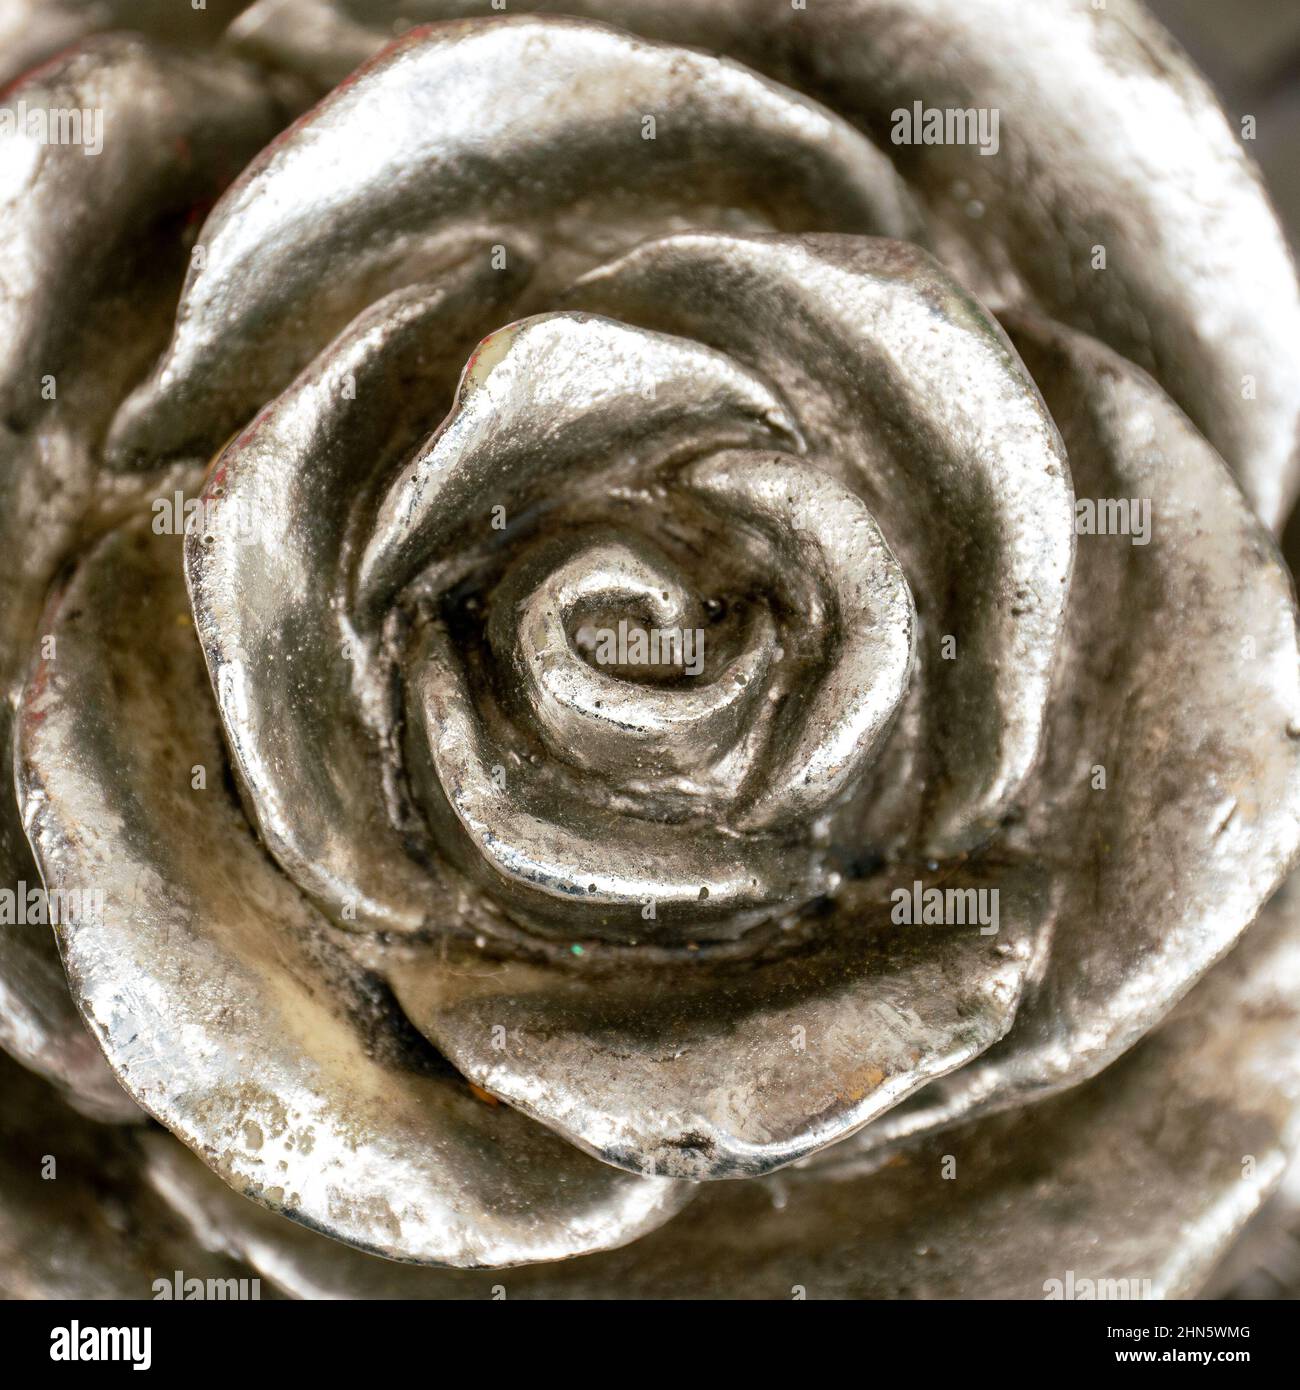 Europa. Escultura de una rosa de metal. Flor de hierro. Foto de stock